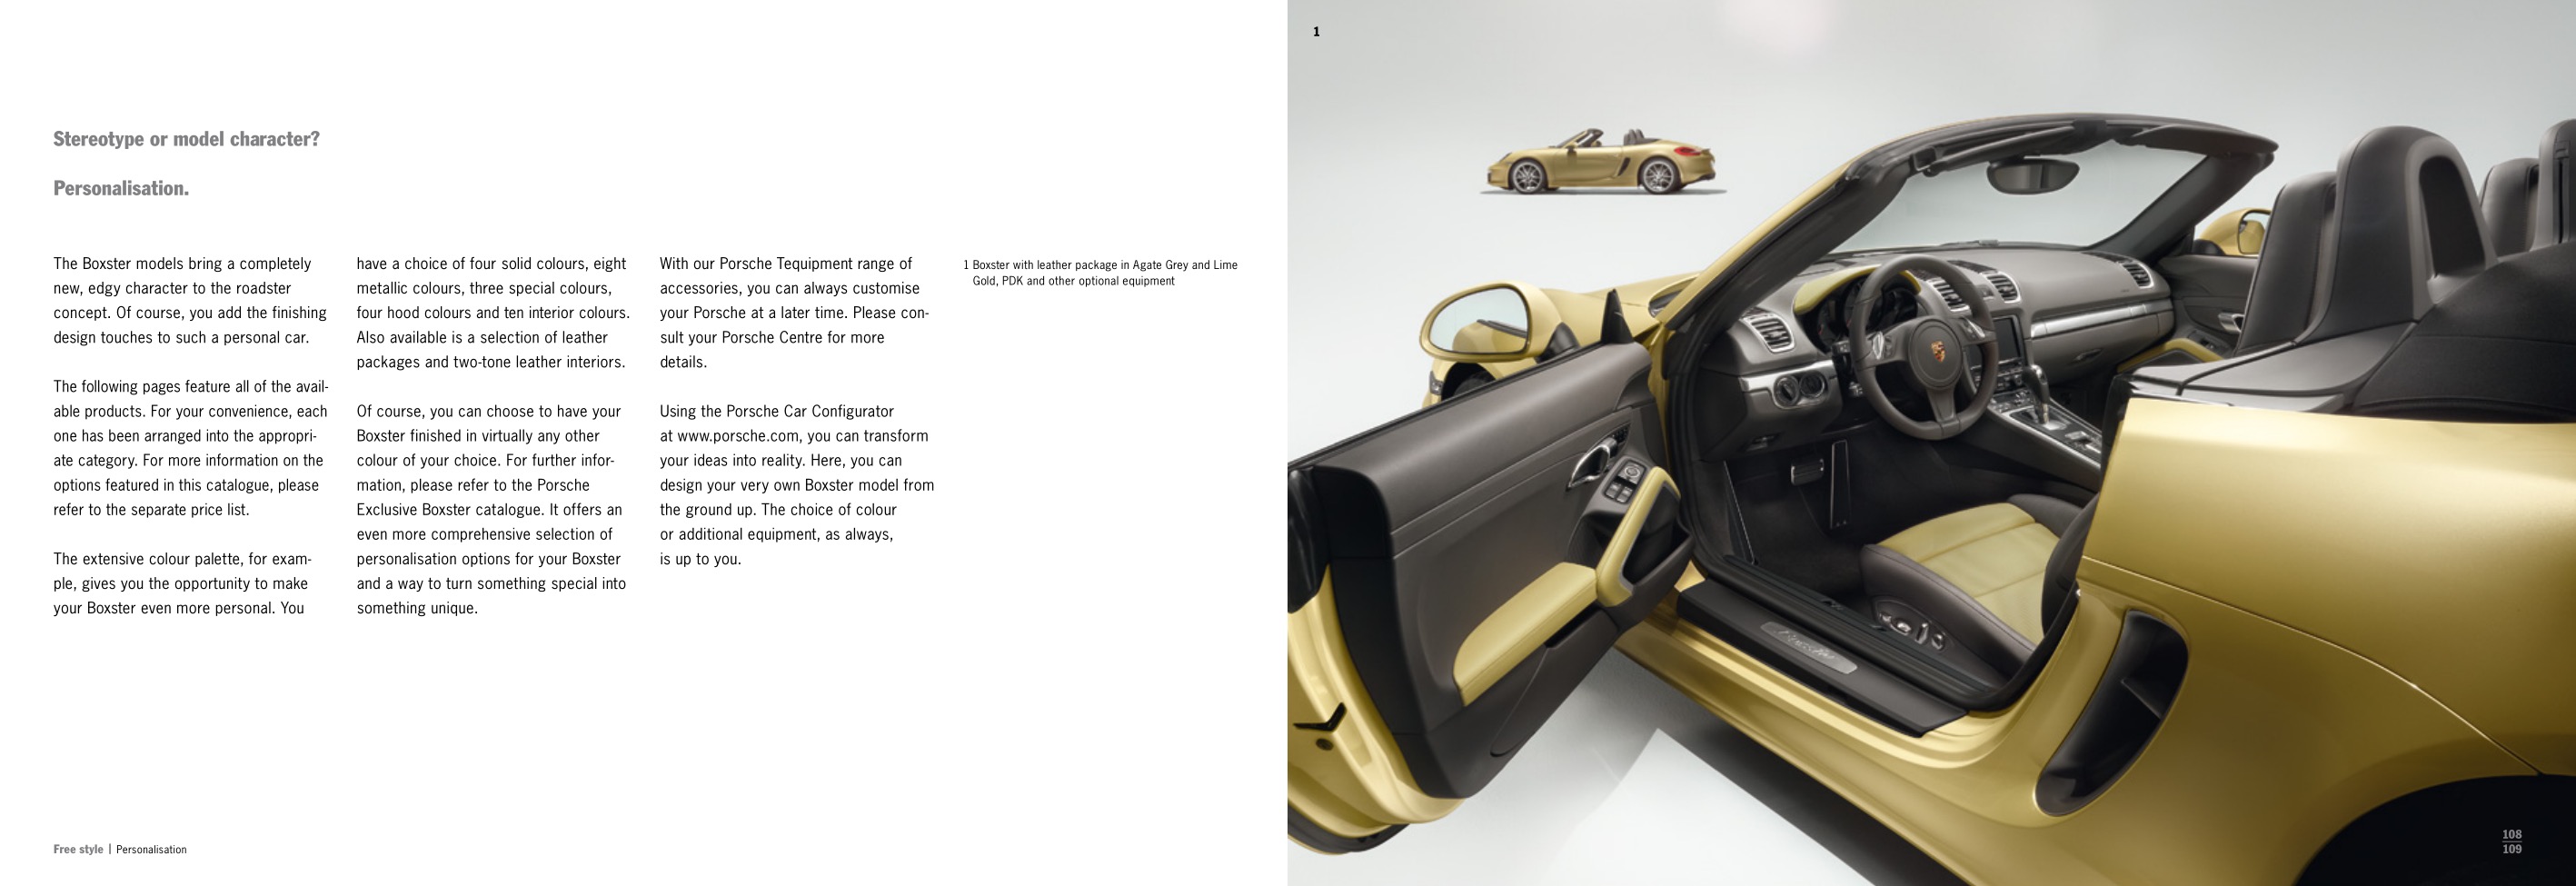 2013 Porsche Boxster Brochure Page 68